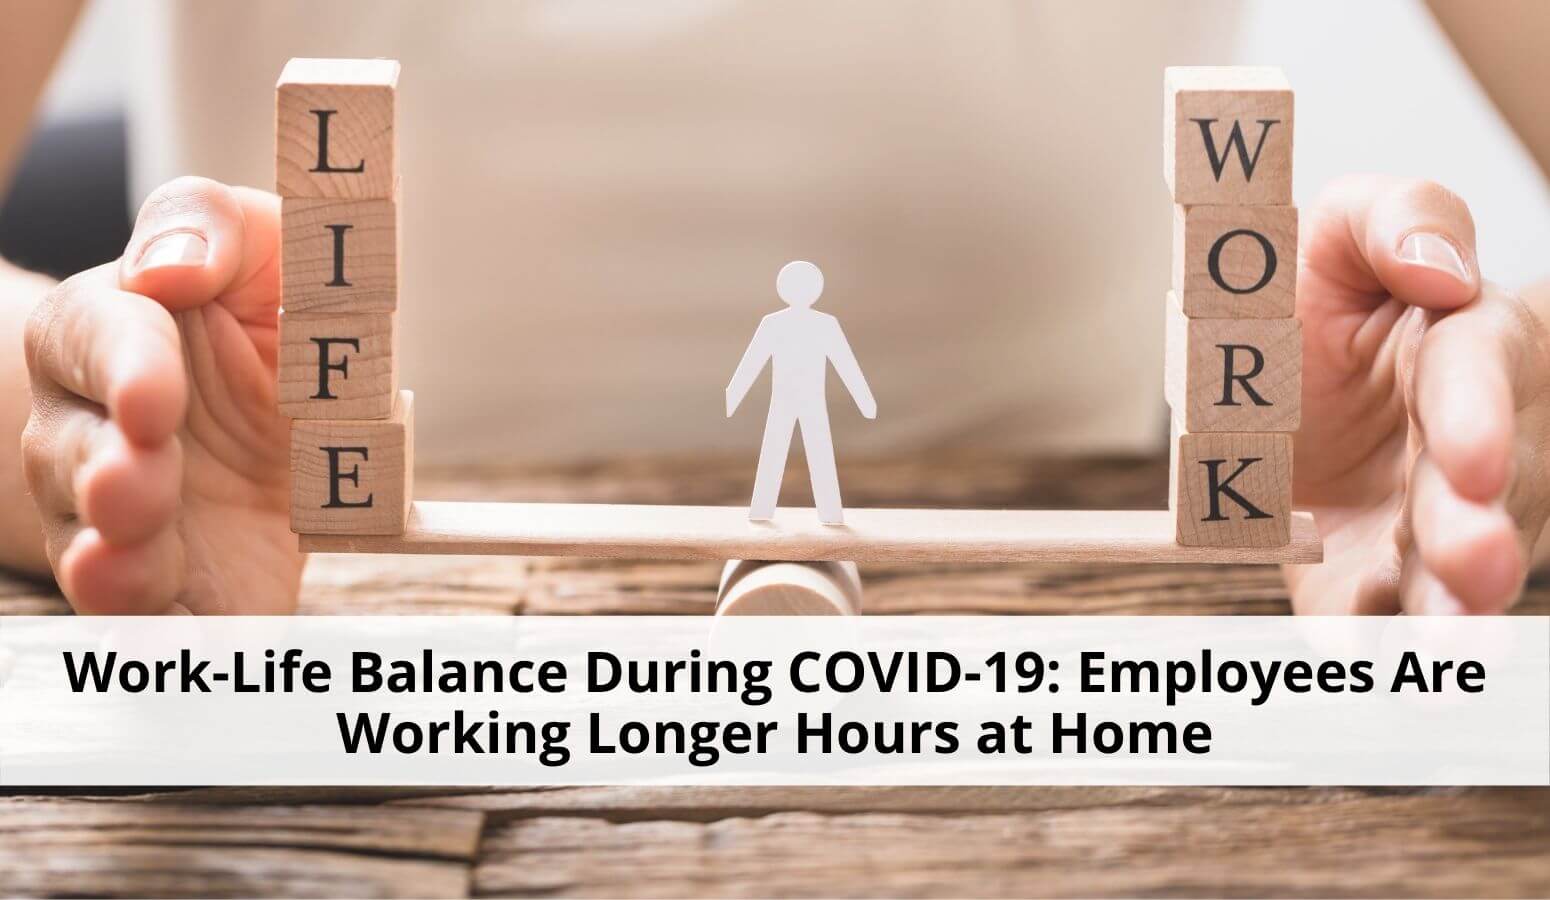 Work life balance during COVID-19